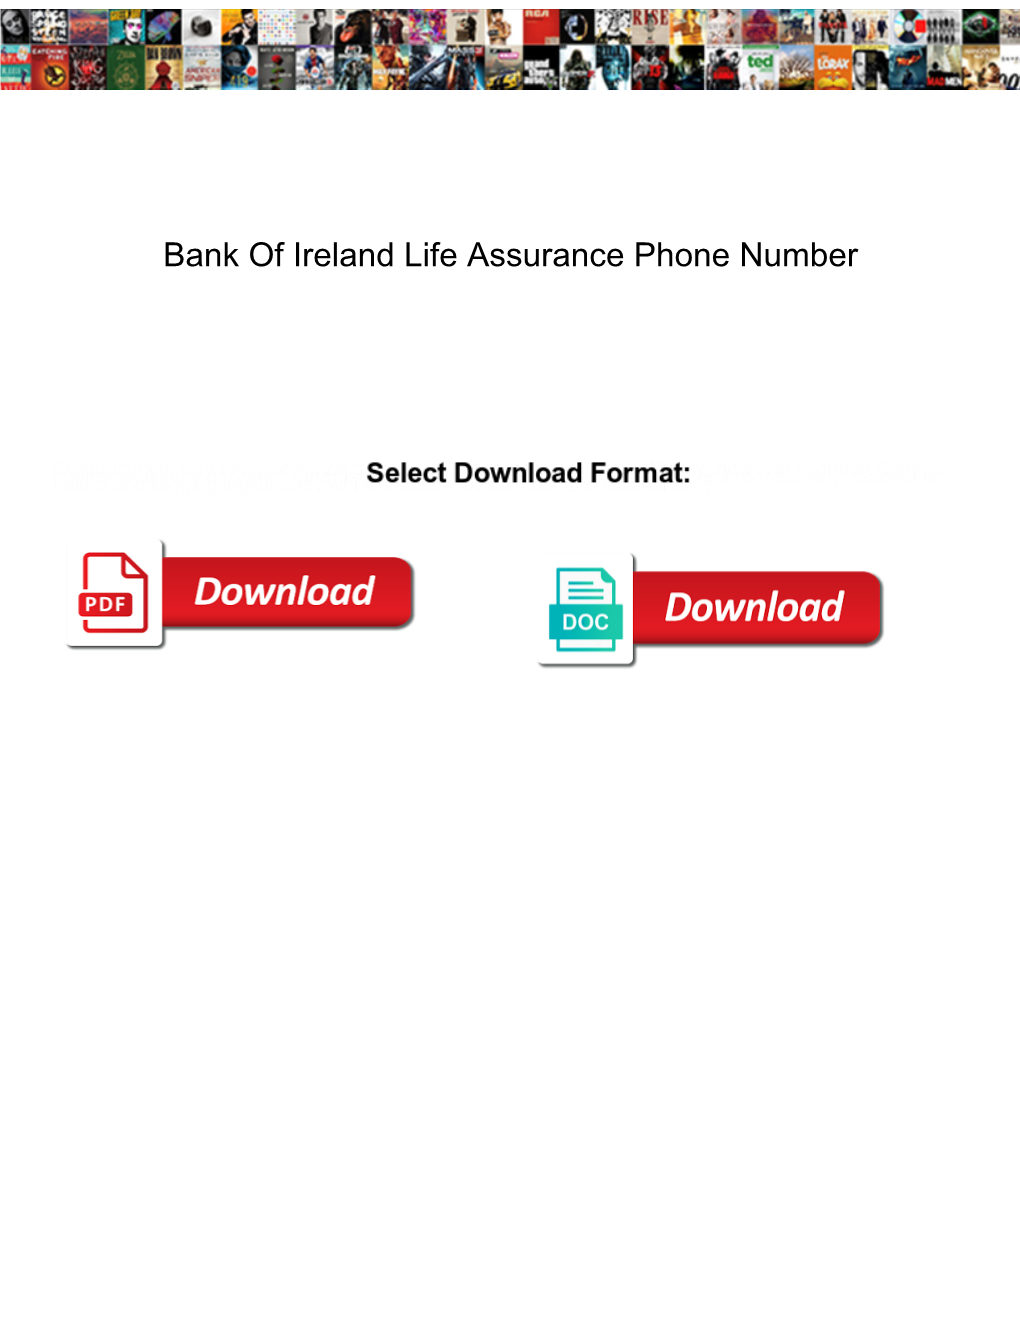 Bank of Ireland Life Assurance Phone Number